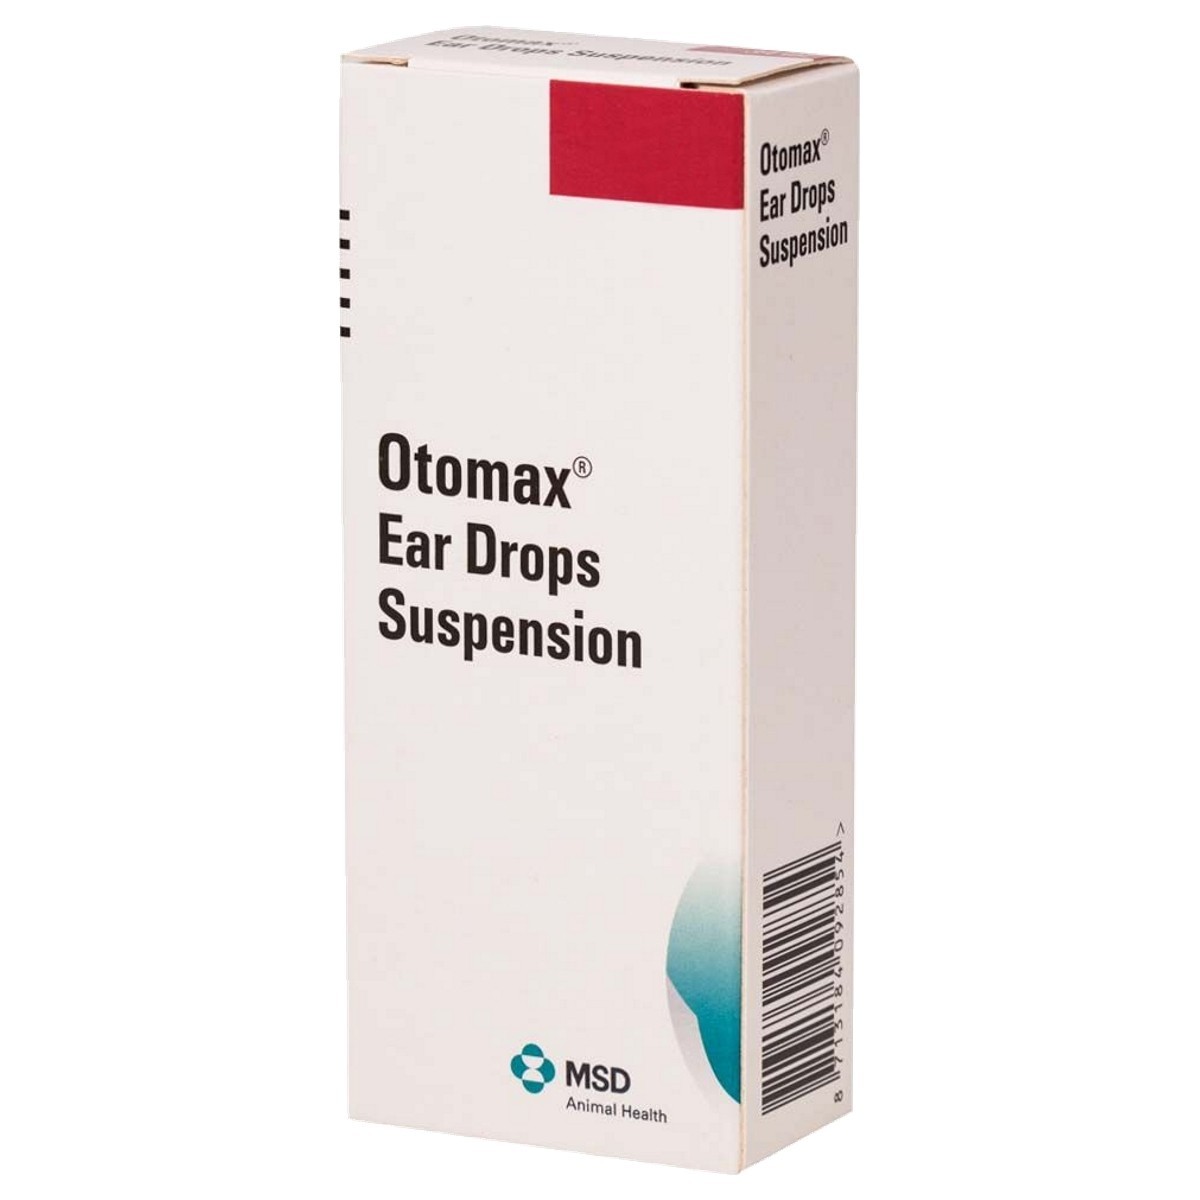 otomax drops